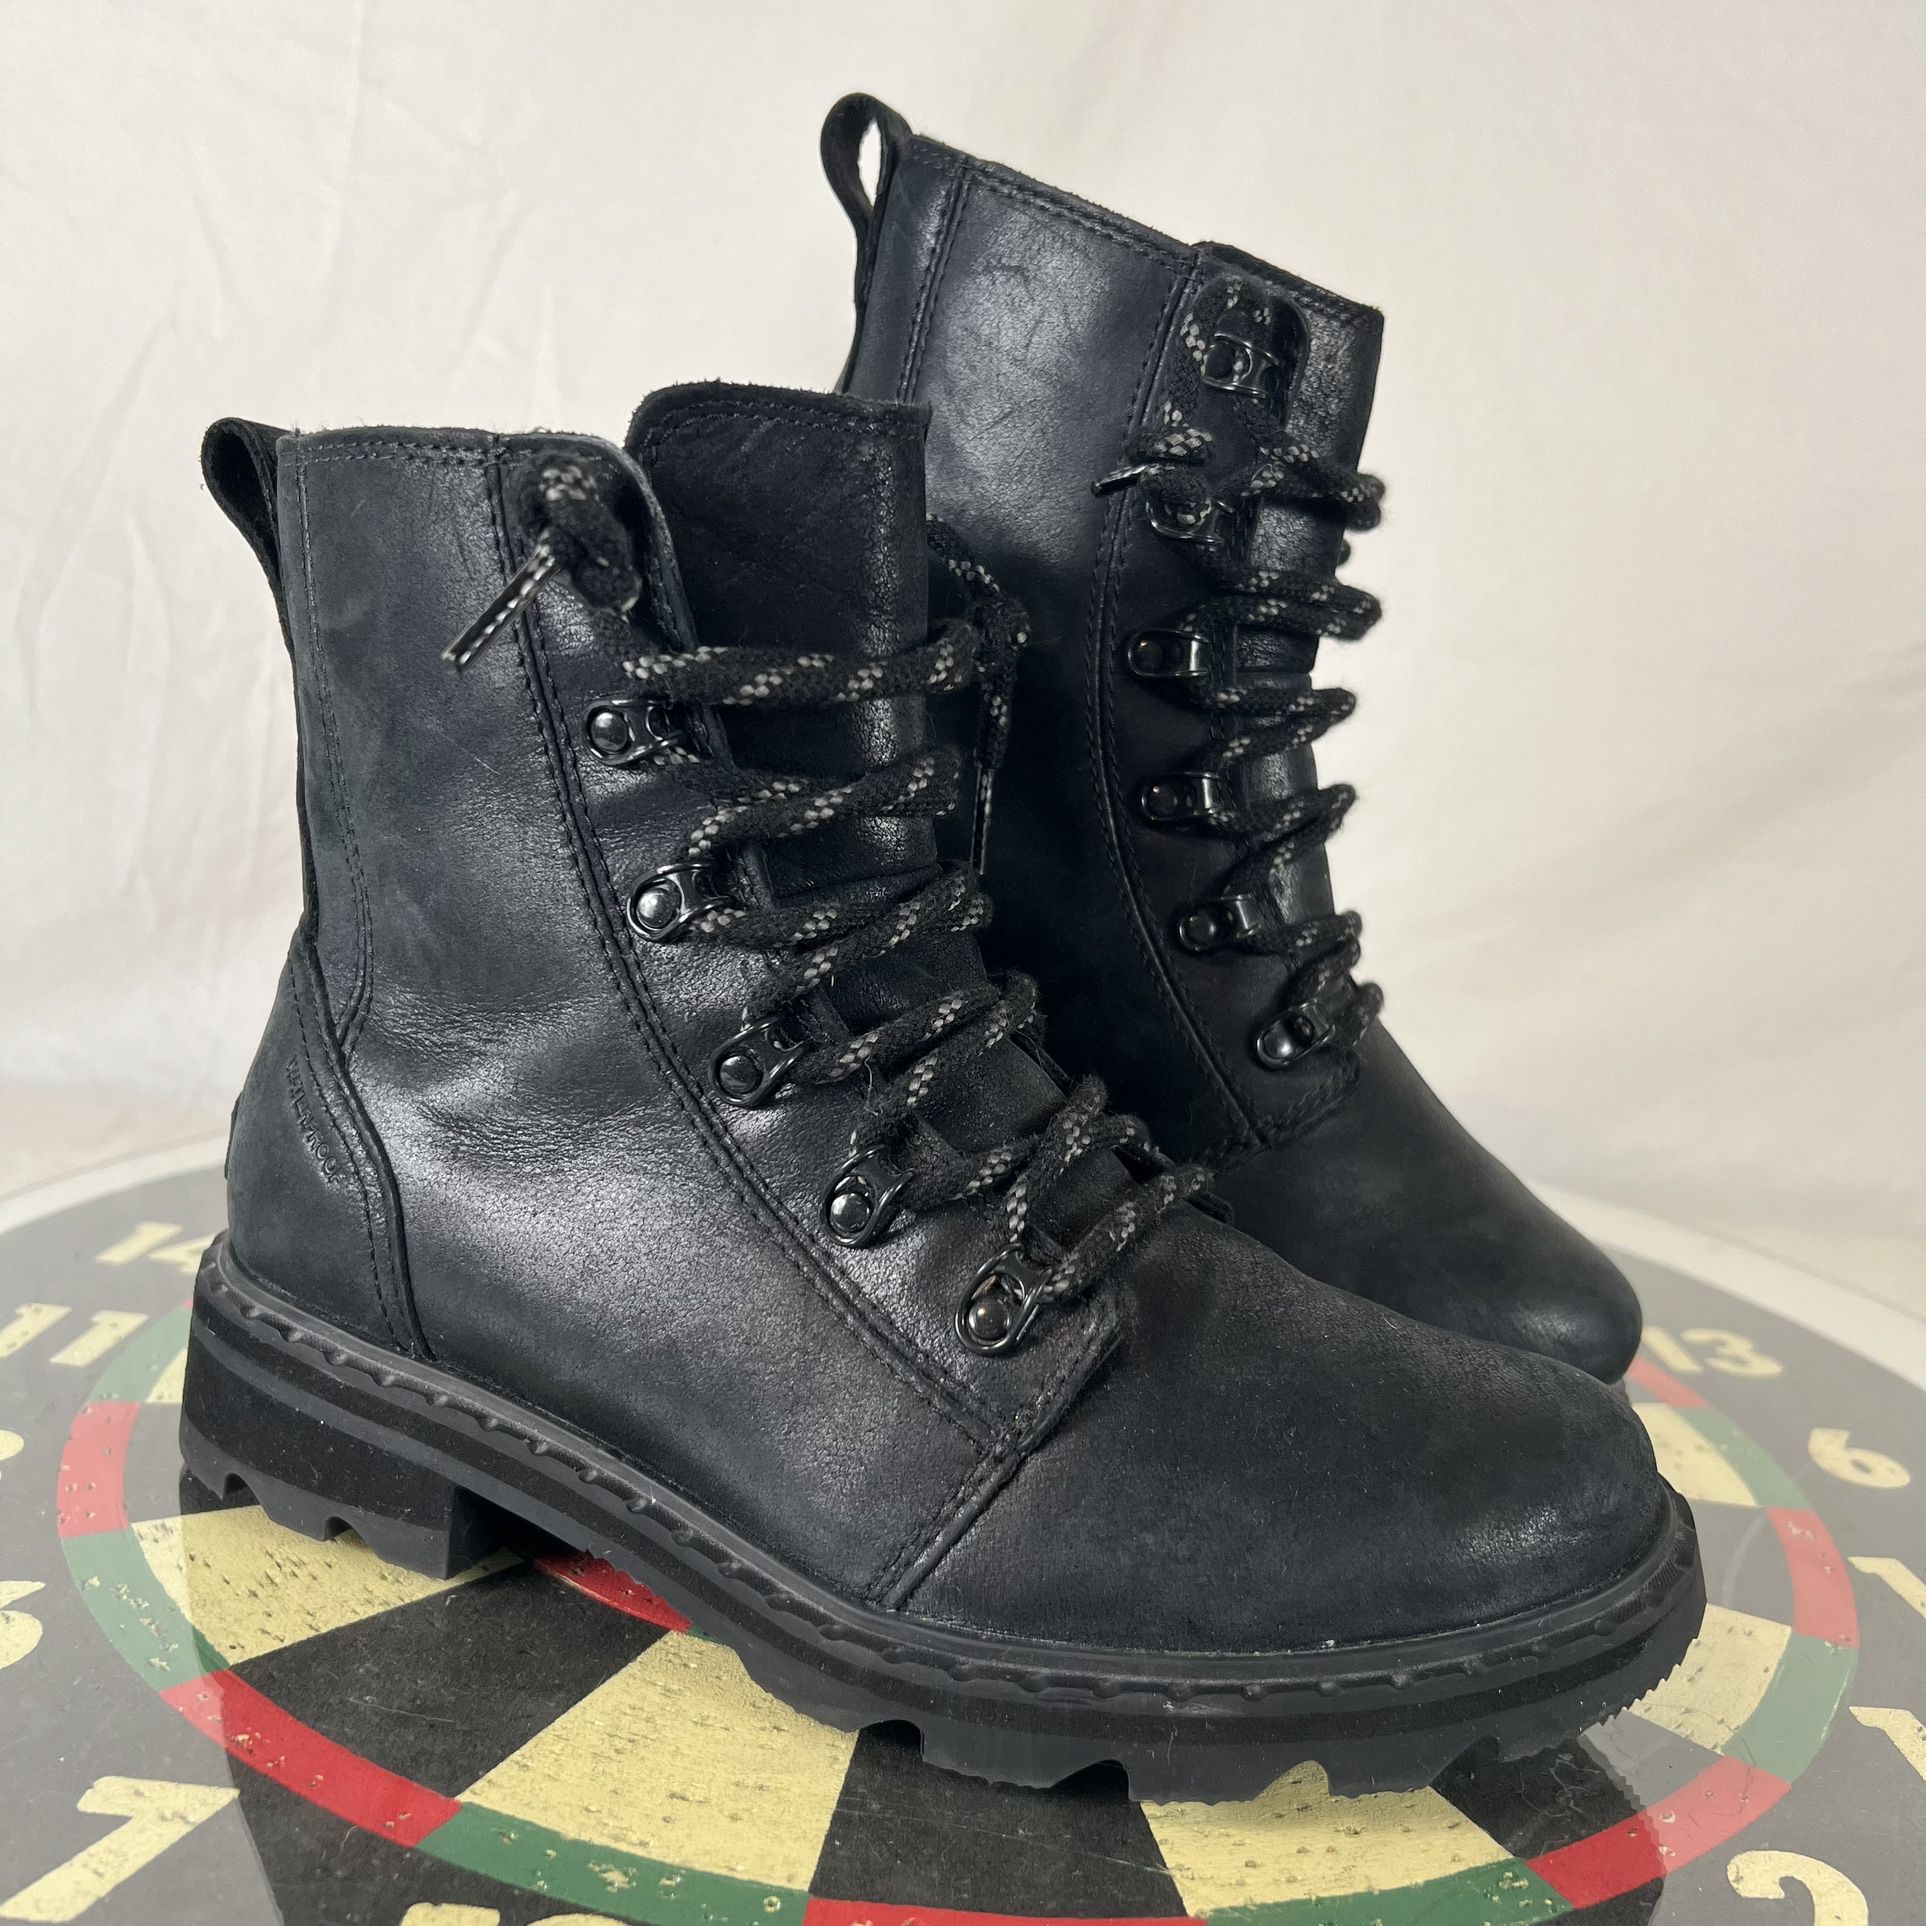 Sorel Lennox Lace Up Combat Boots STKD Waterproof Black Leather Women’s Size 6.5